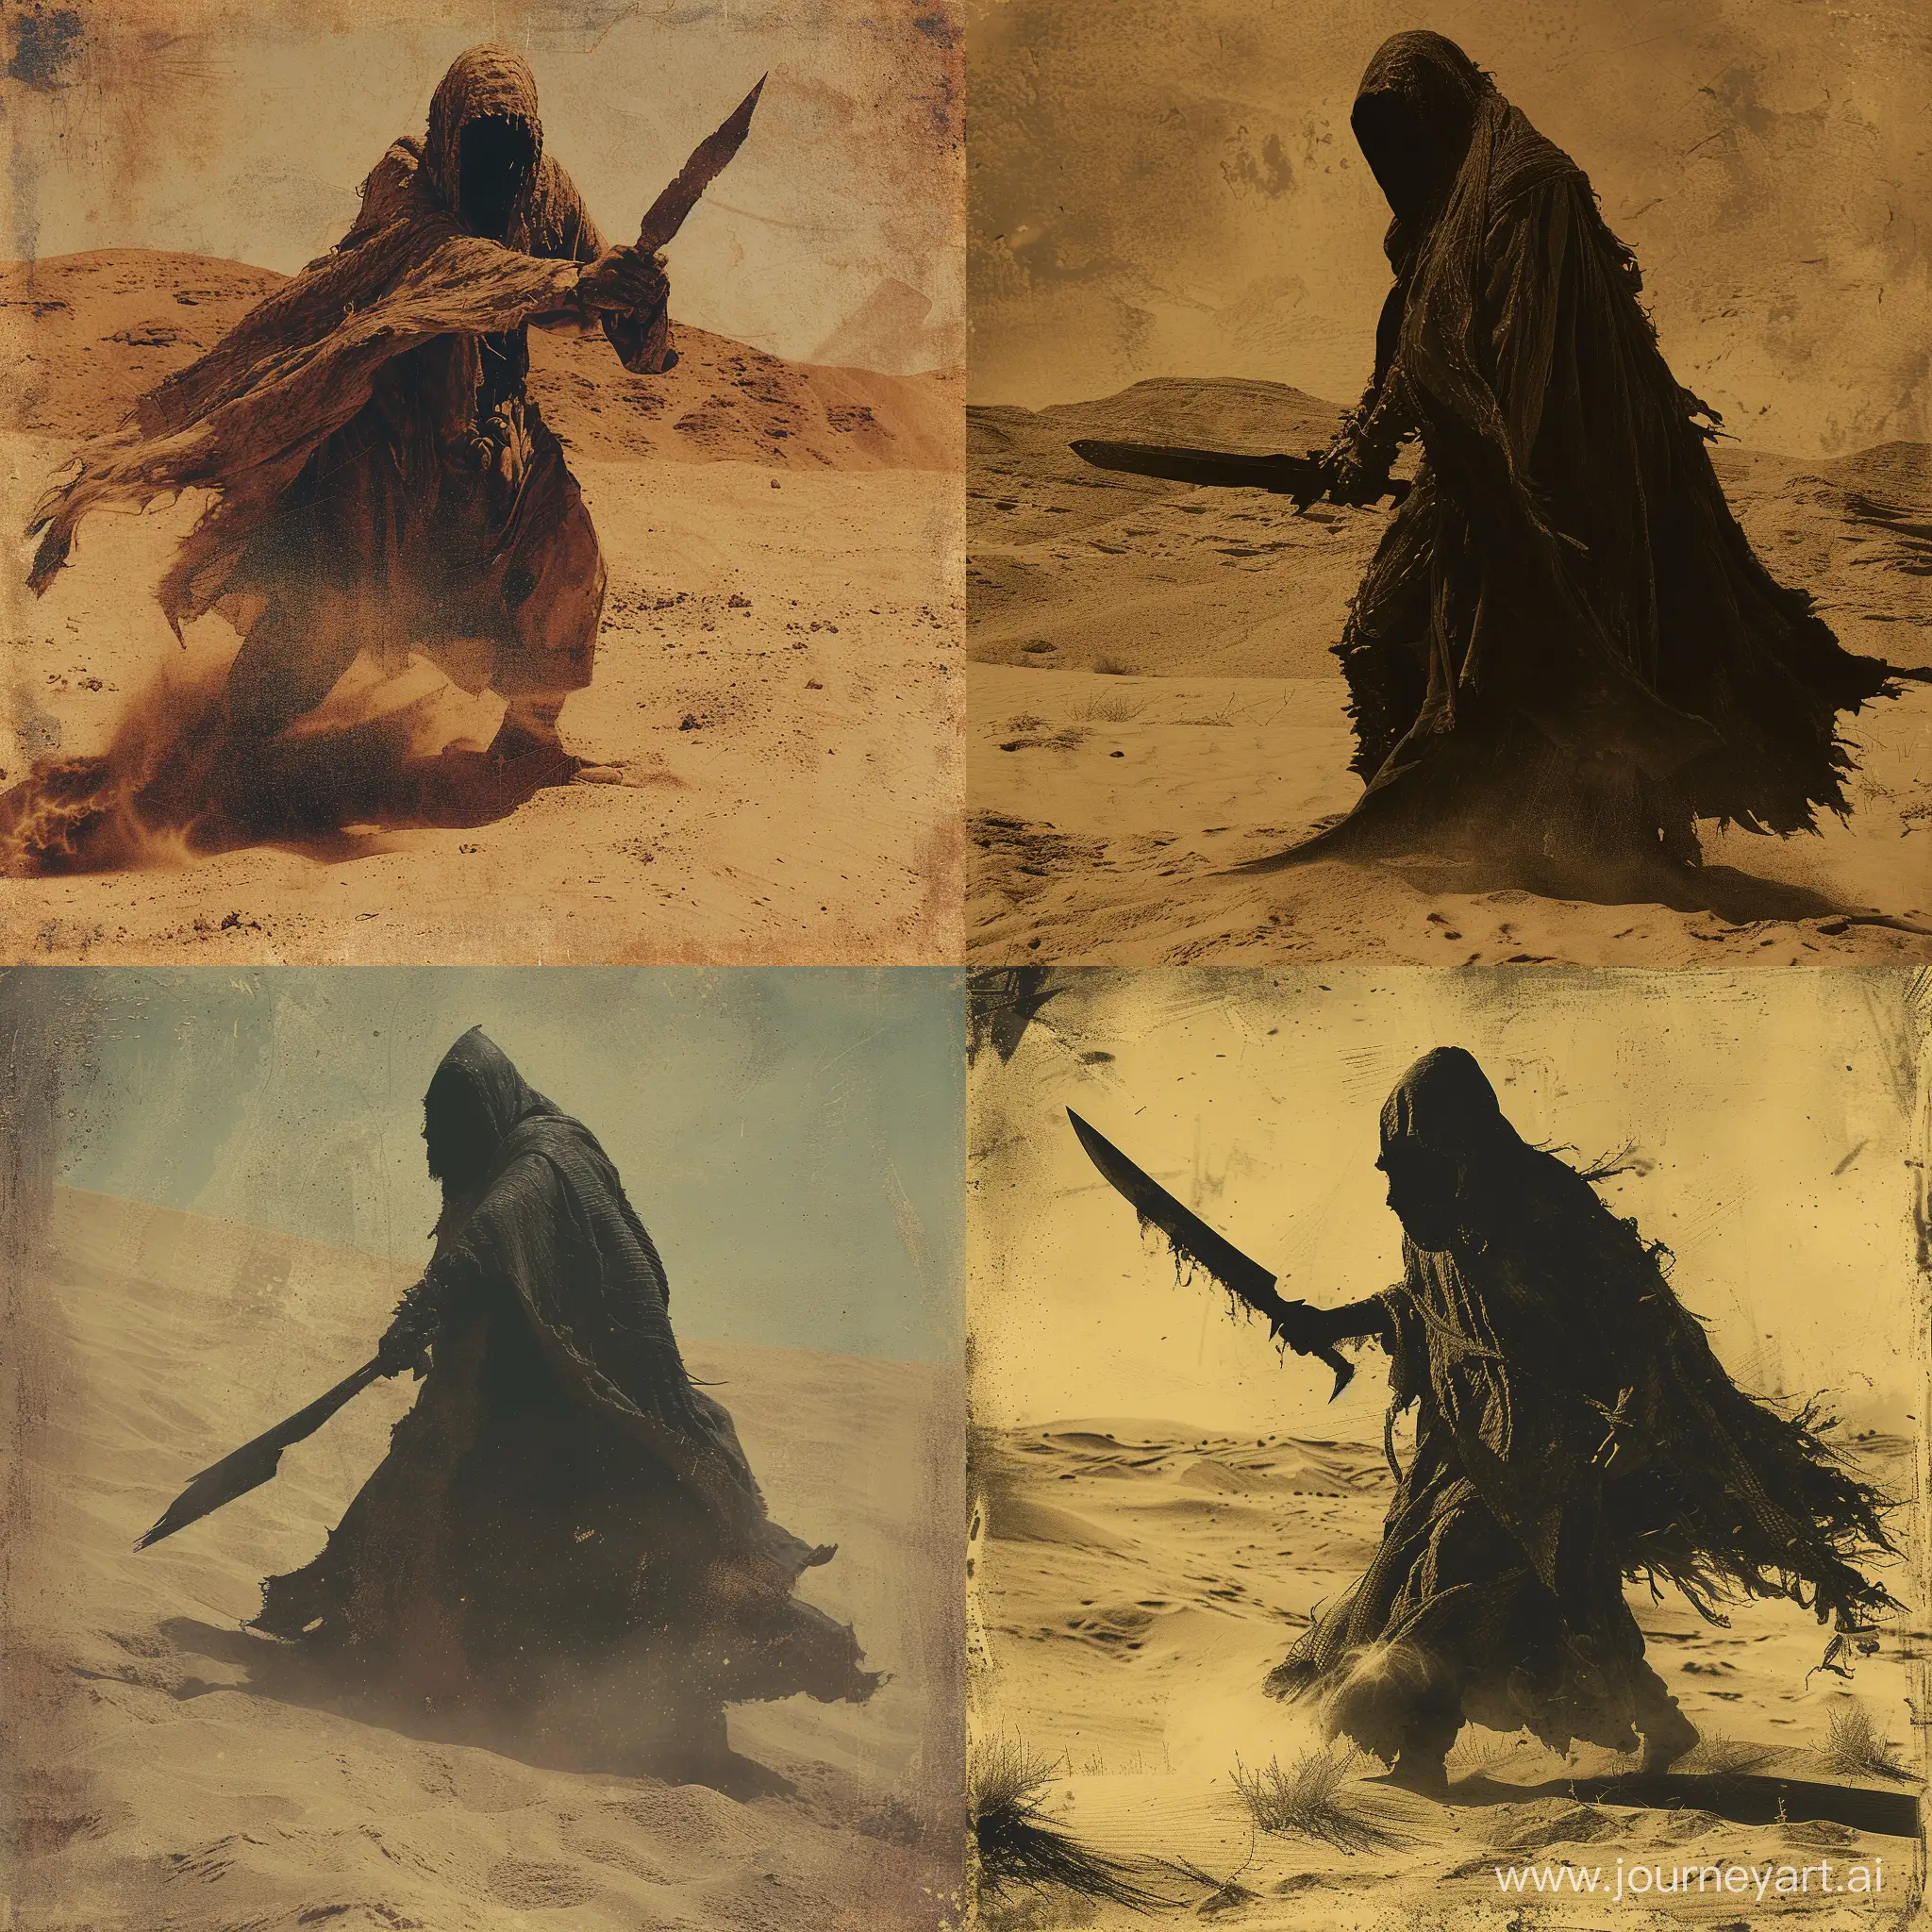 Sinister-Desert-Nomad-with-Cursed-Sandworm-Cloak-and-Crysknife